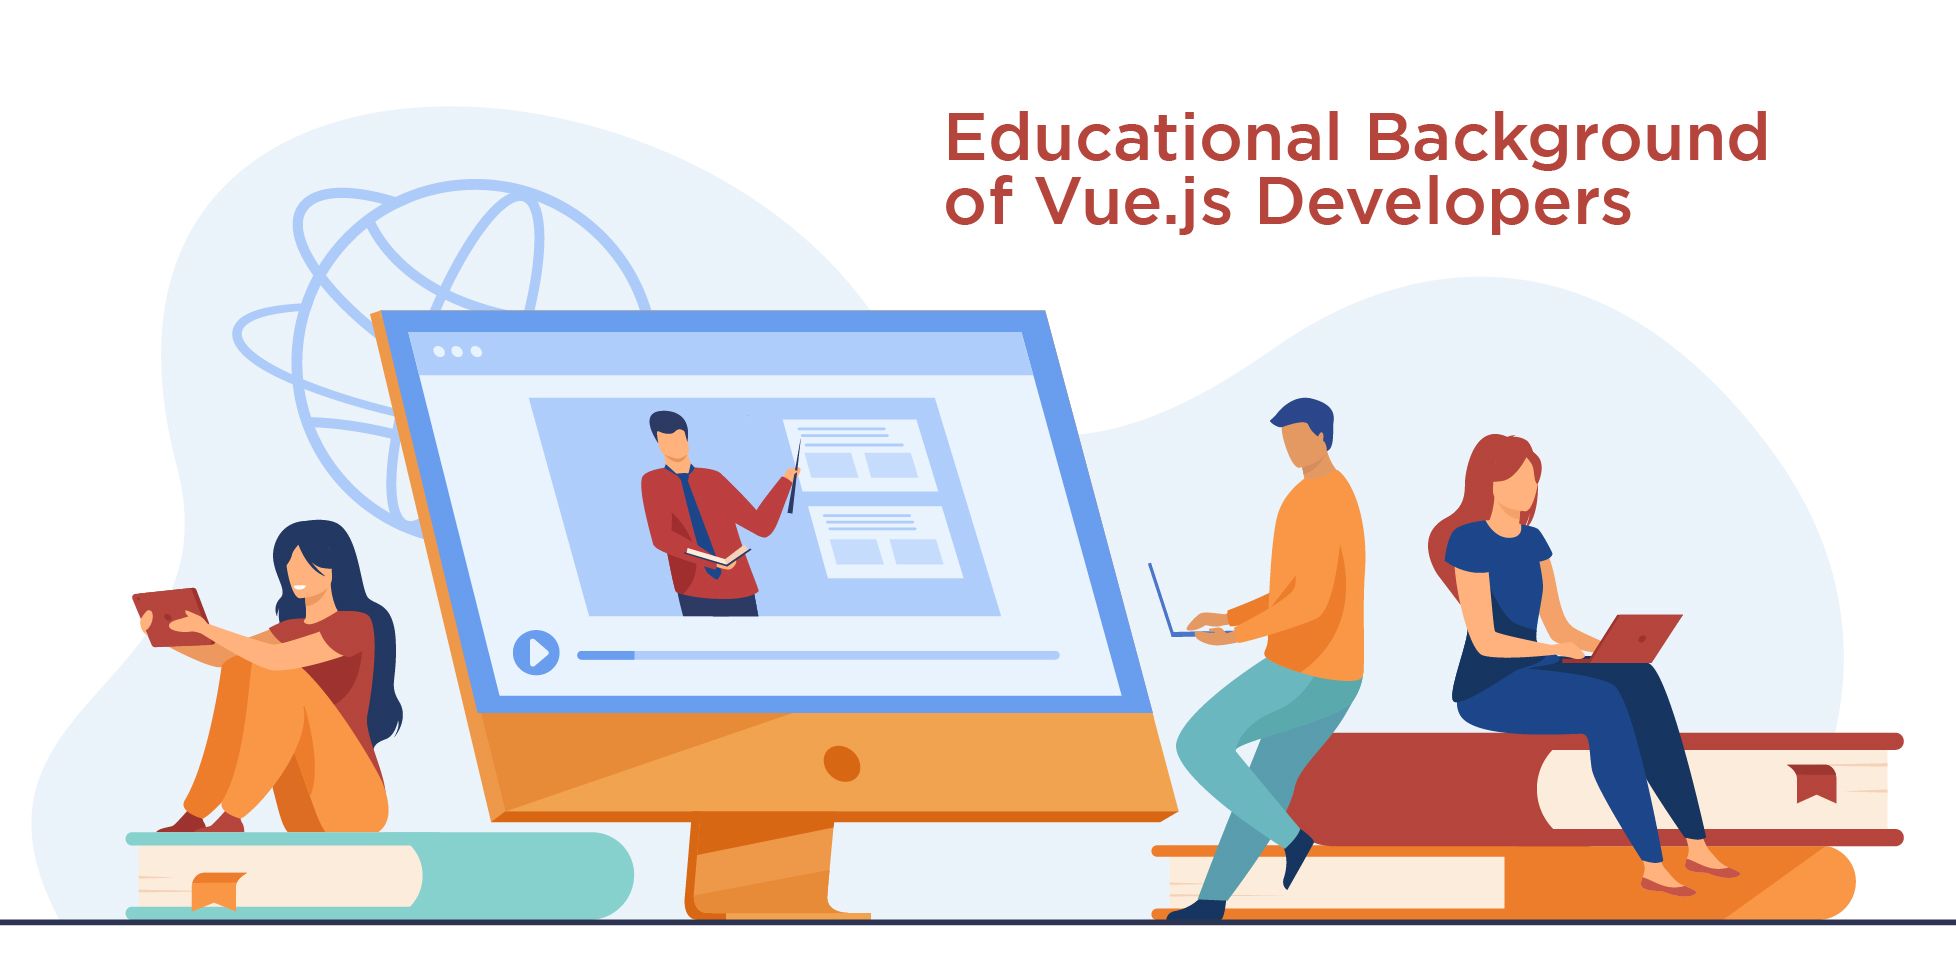 Educational Background of Vue.js Developers